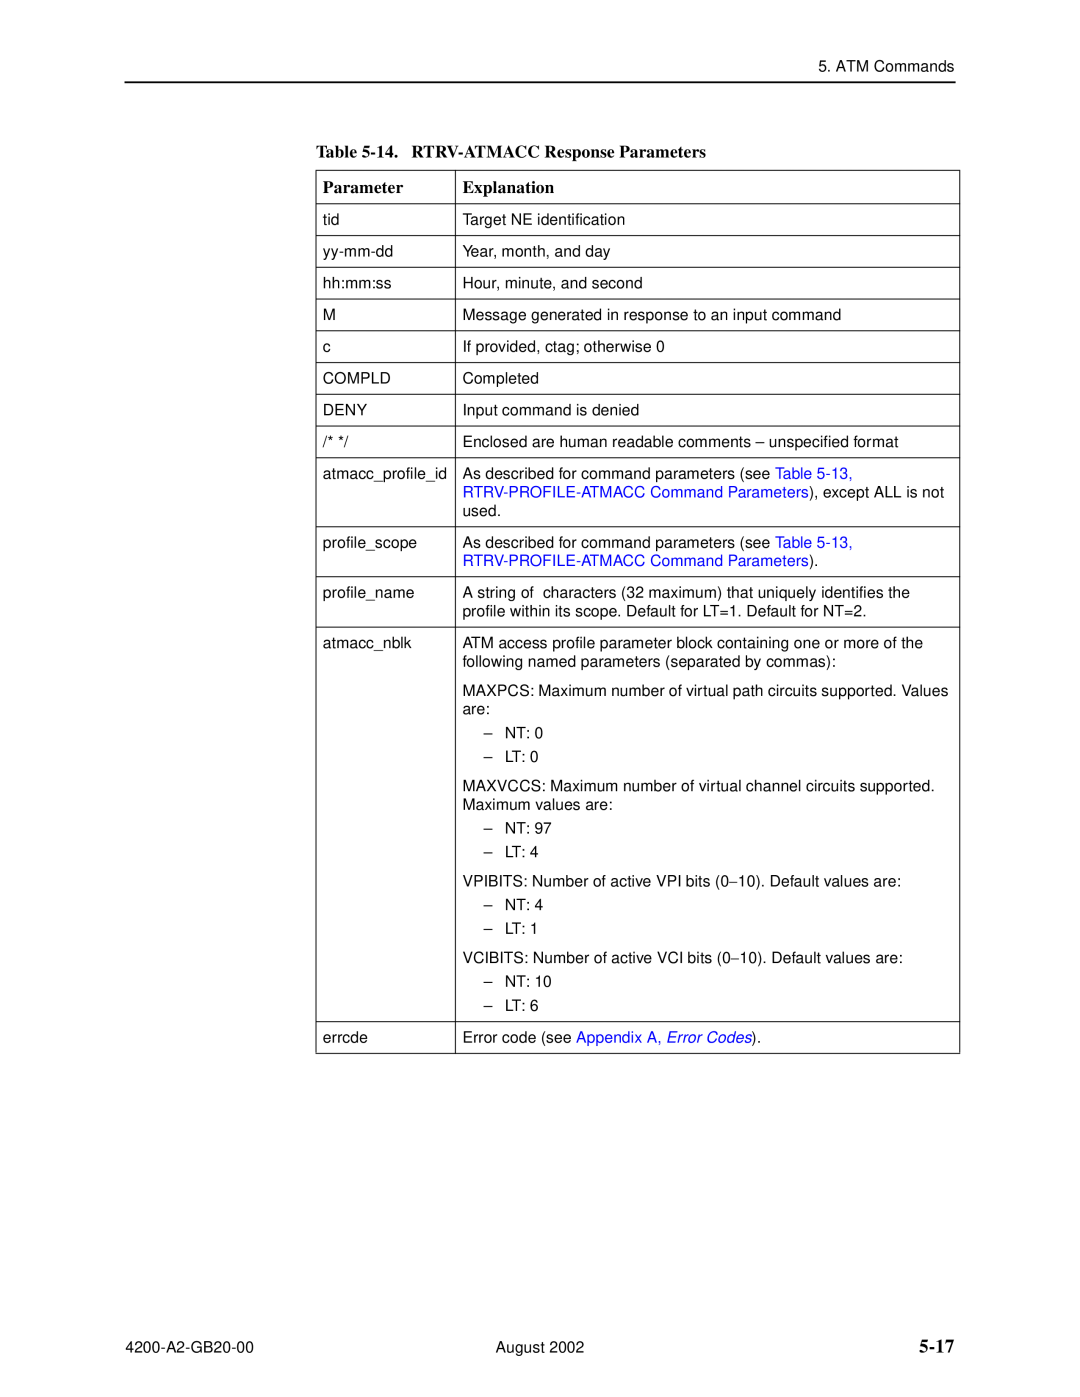 Paradyne 4200 manual 5-17, 14. RTRV-ATMACC Response Parameters, Explanation, RTRV-PROFILE-ATMACC Command Parameters 